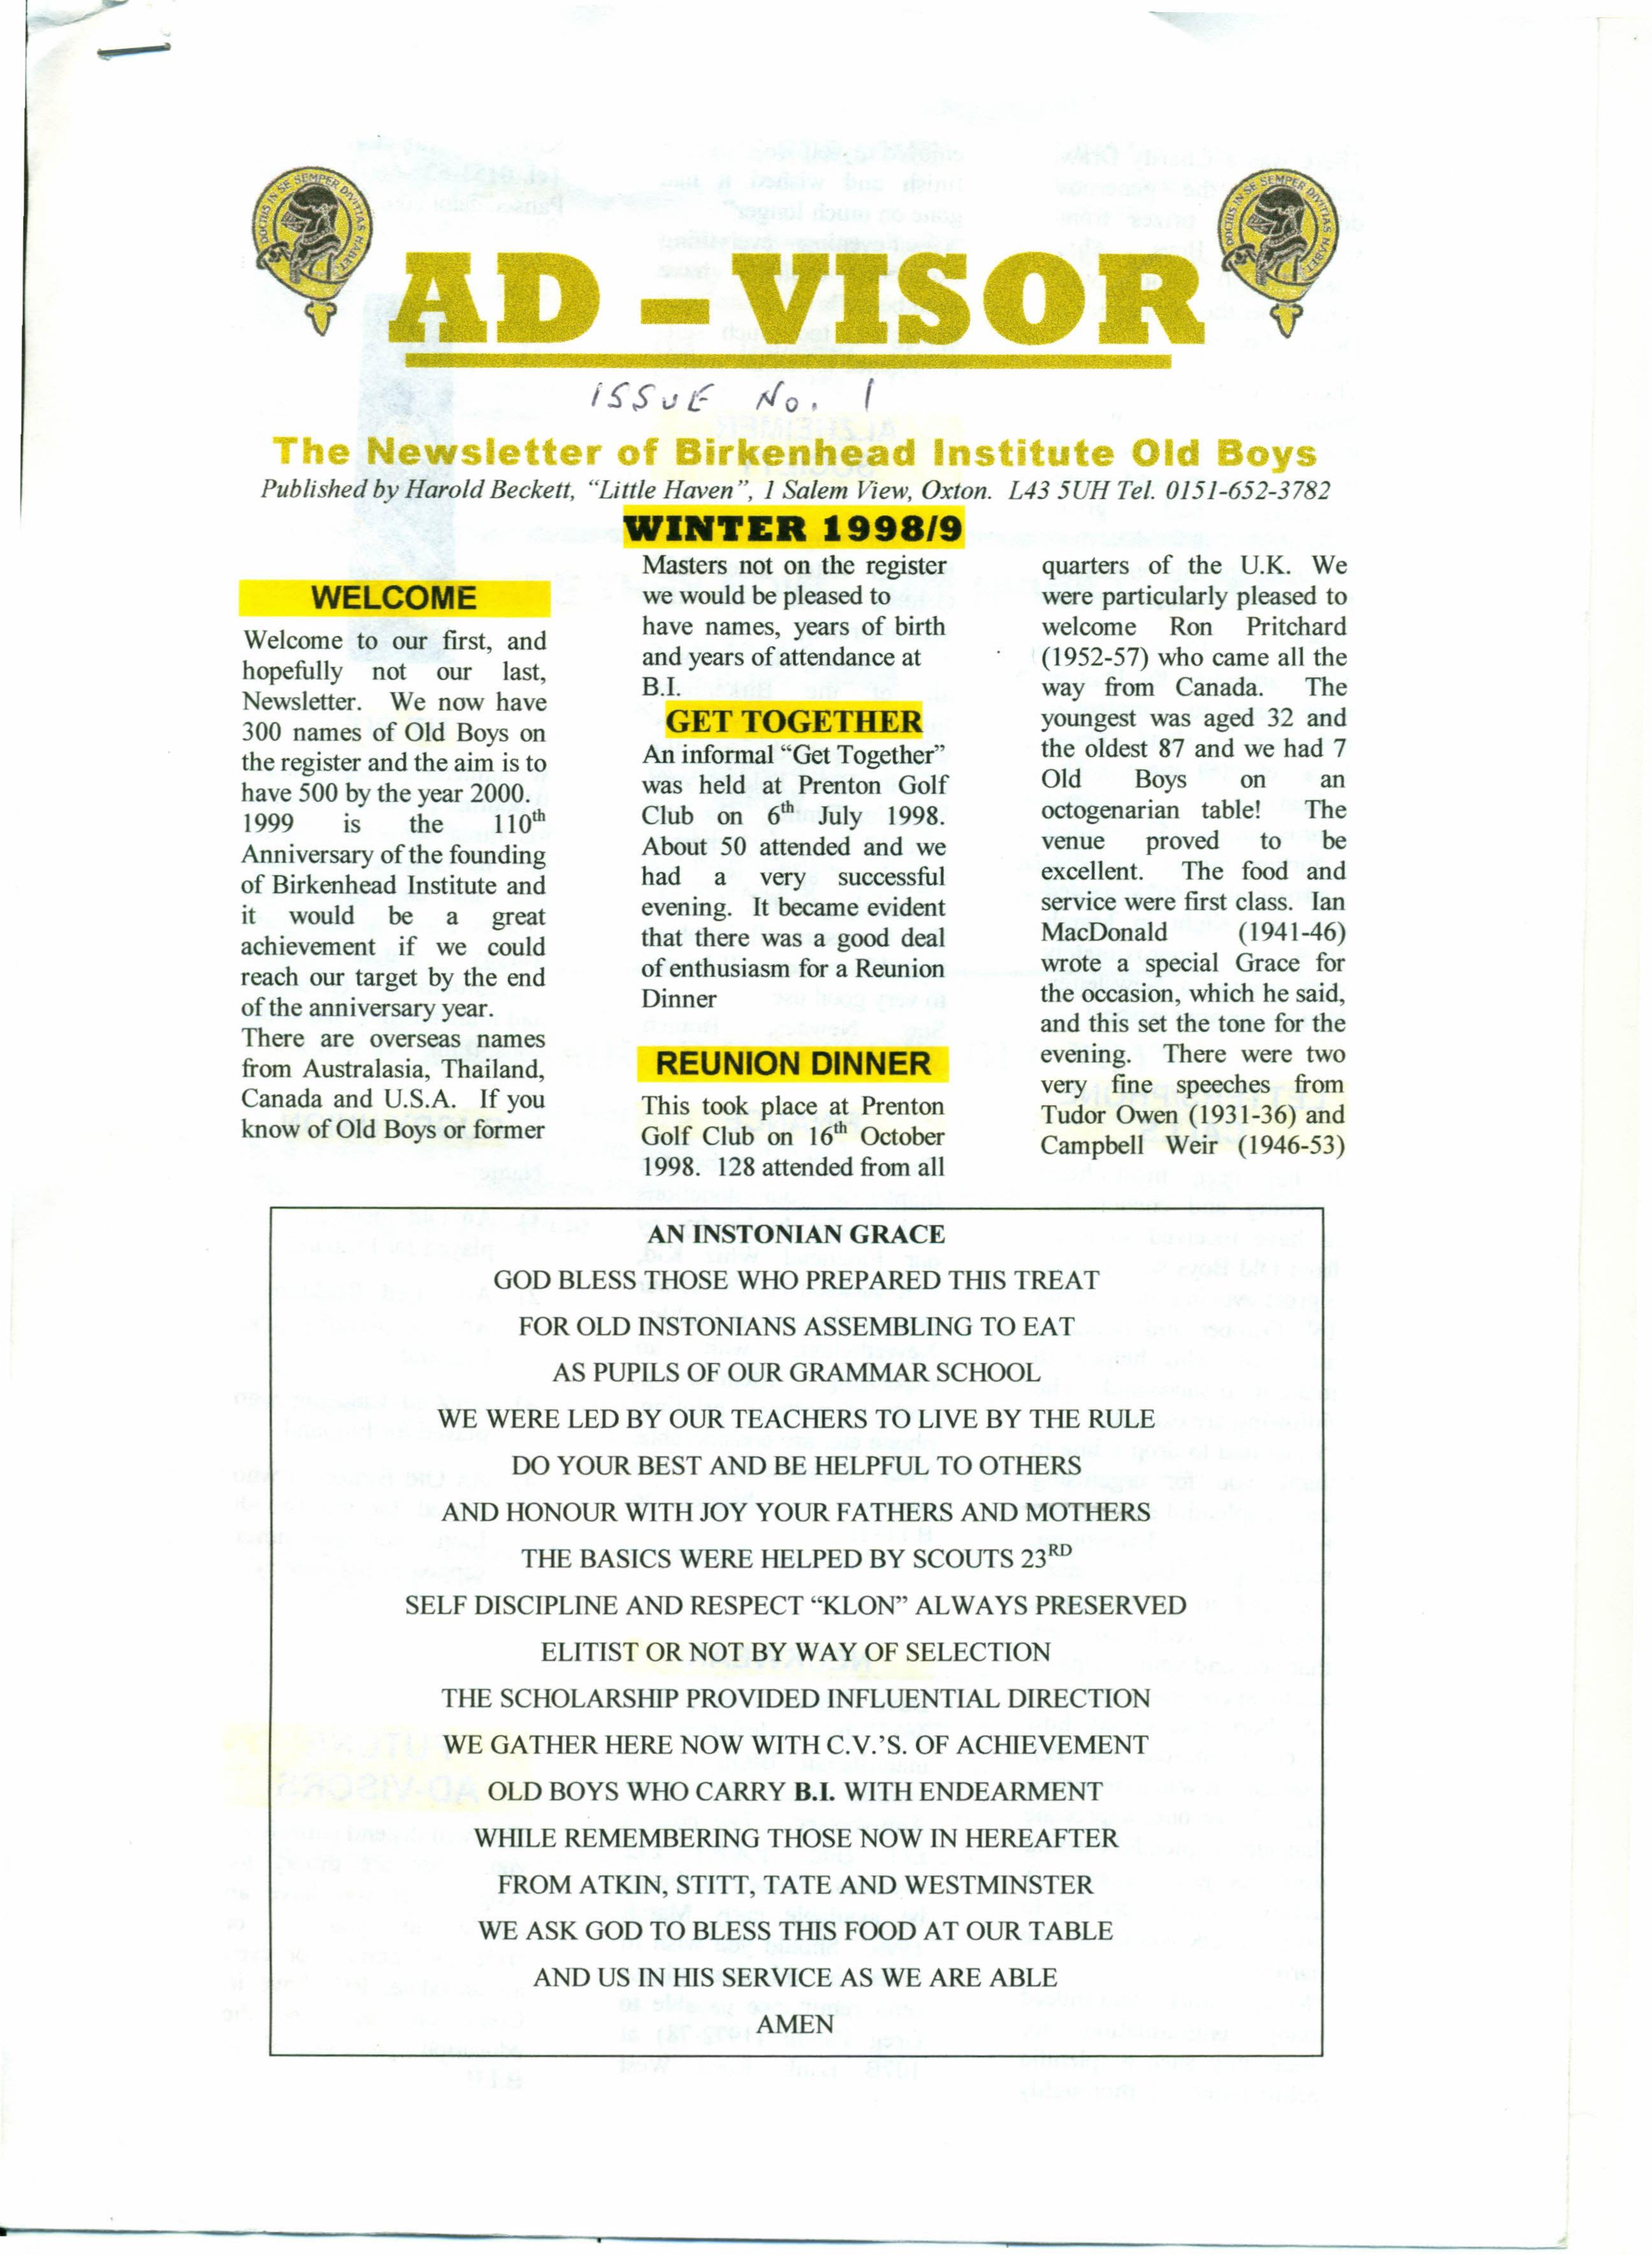 Ad-Visor Winter 1998/99